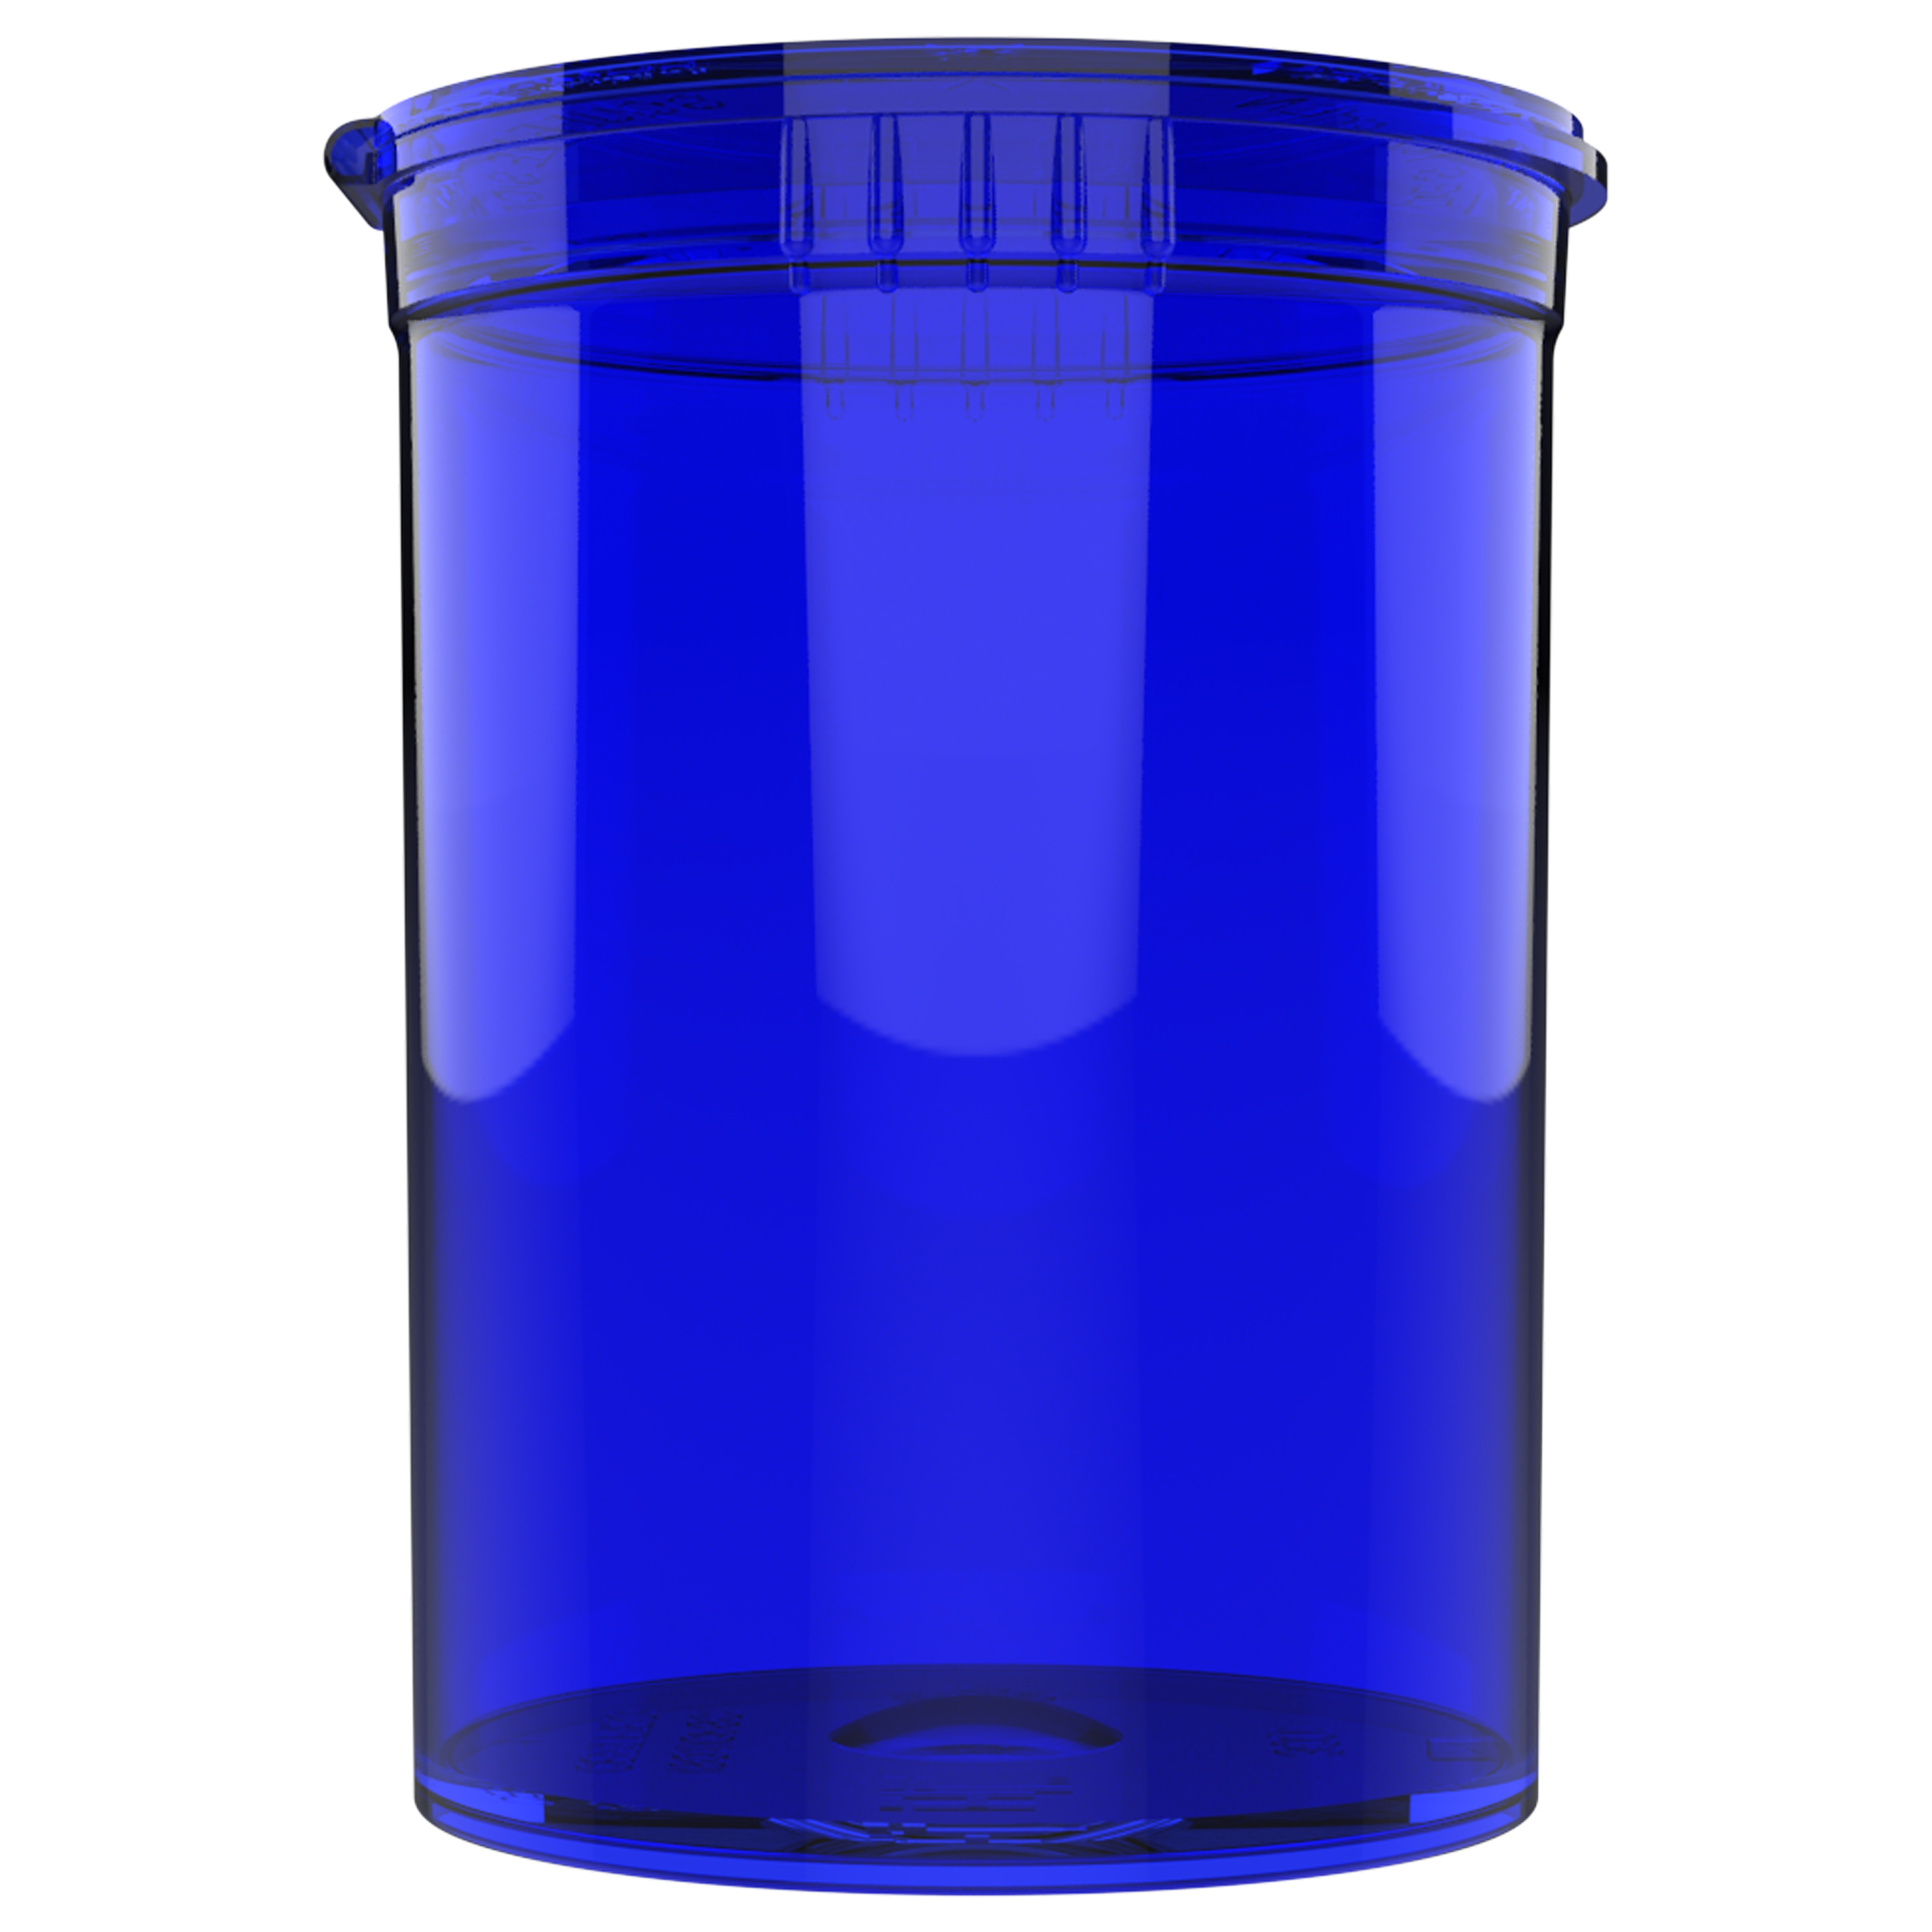 30 Dram x 160 Pop Top Containers 2.05 US Fluid Ounces Black Smell Proof -  Bulk